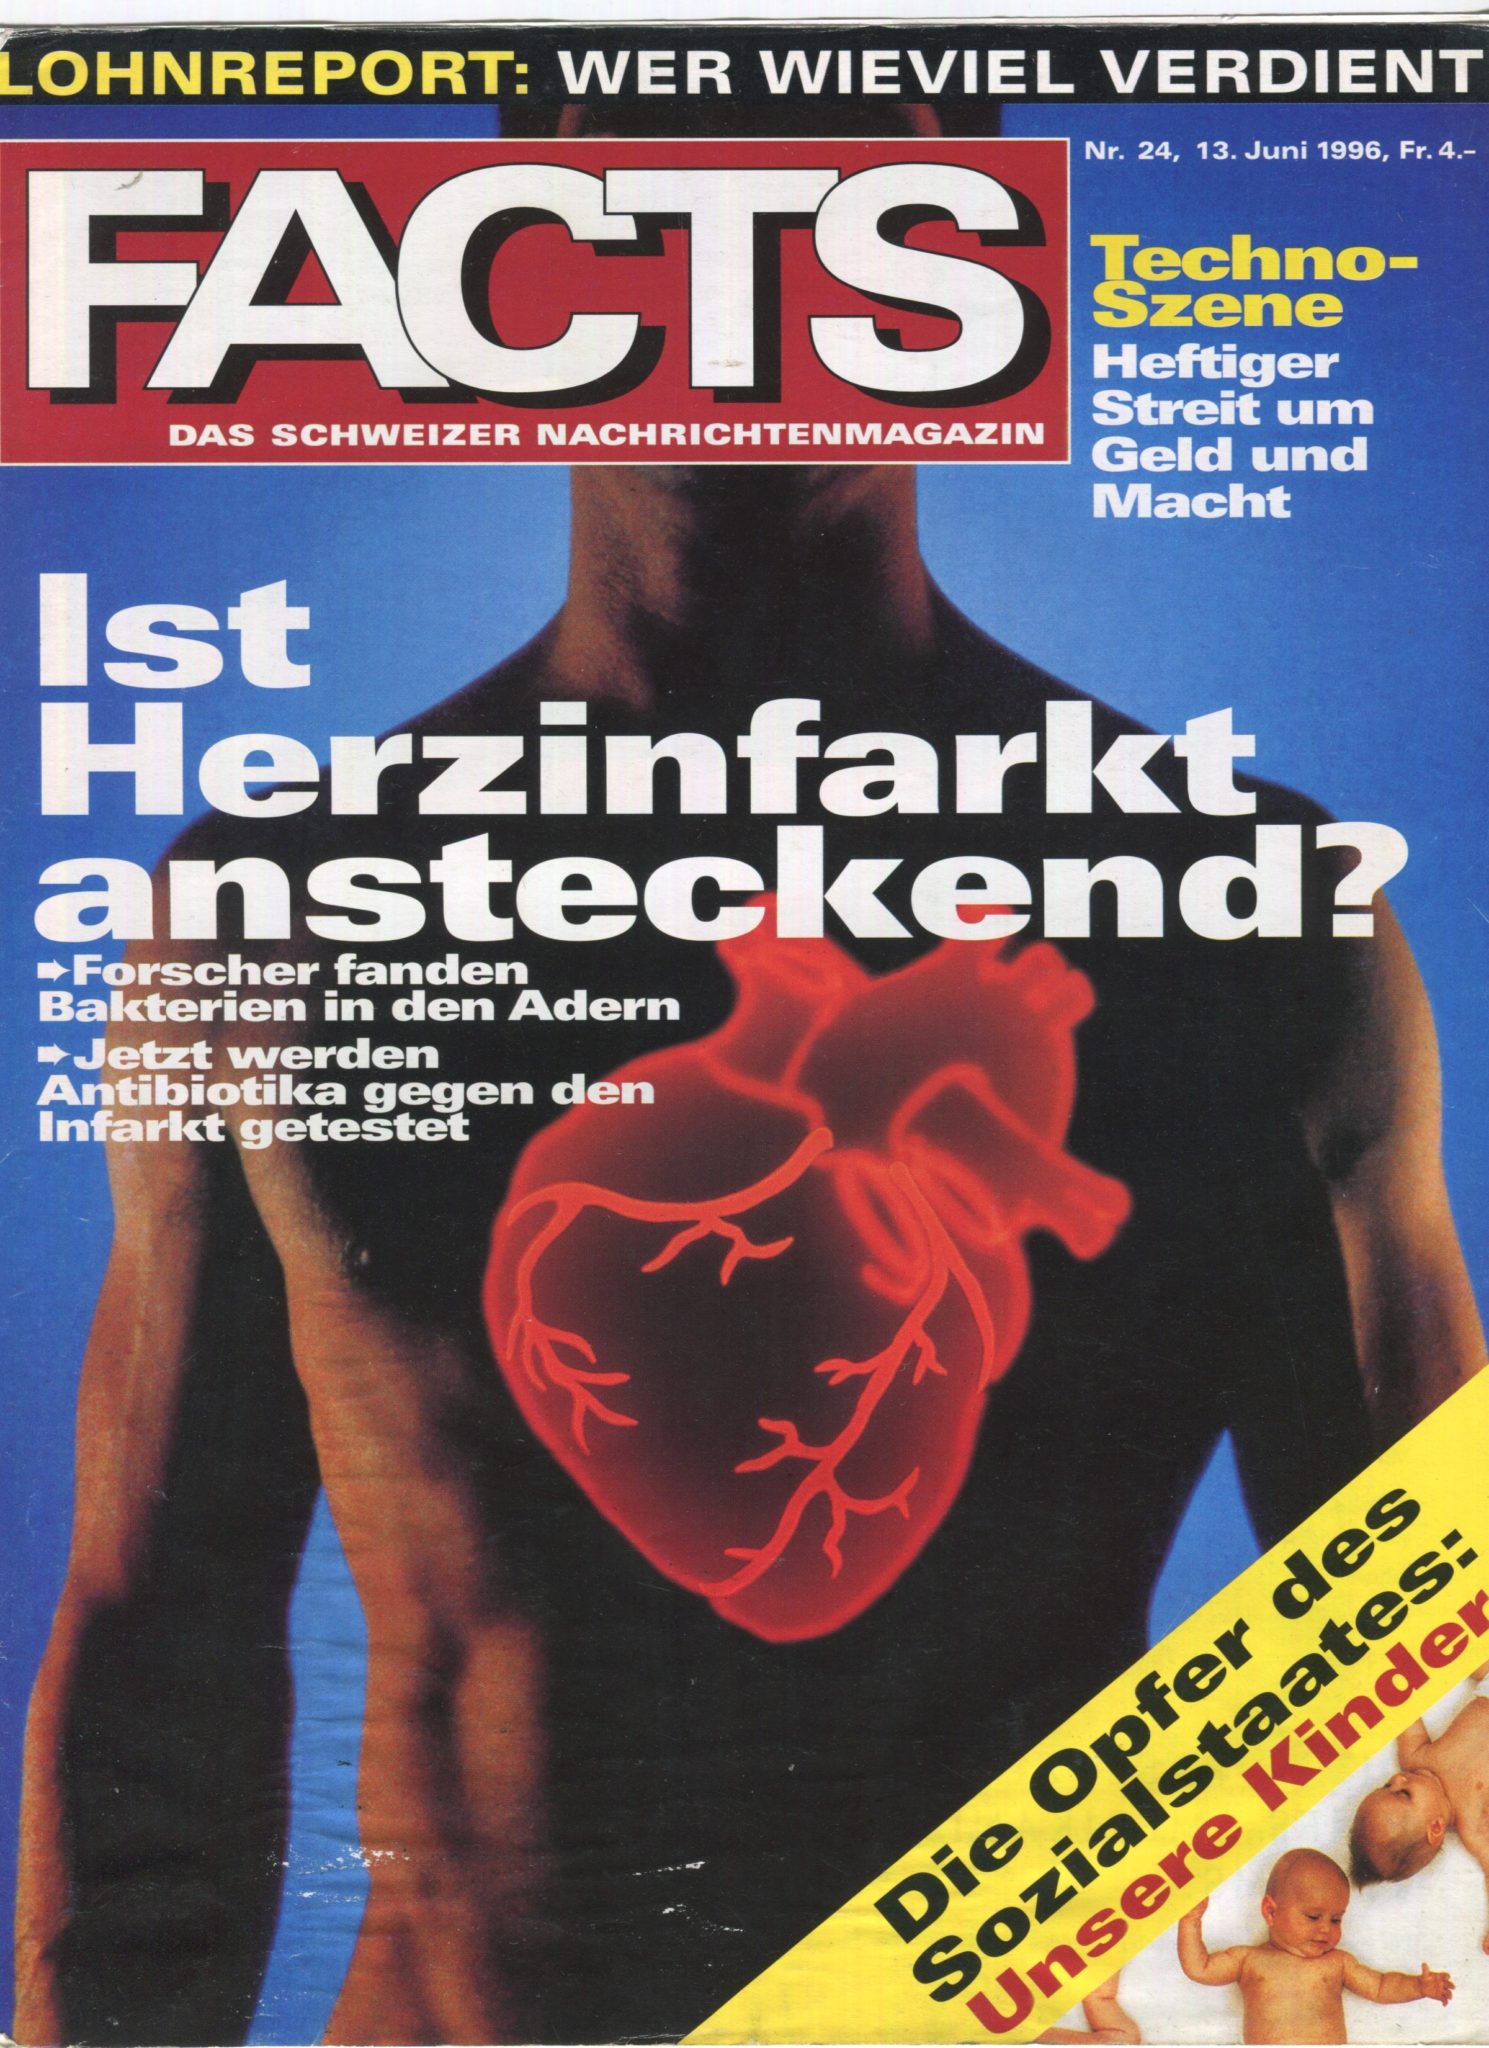 FACTS magazine